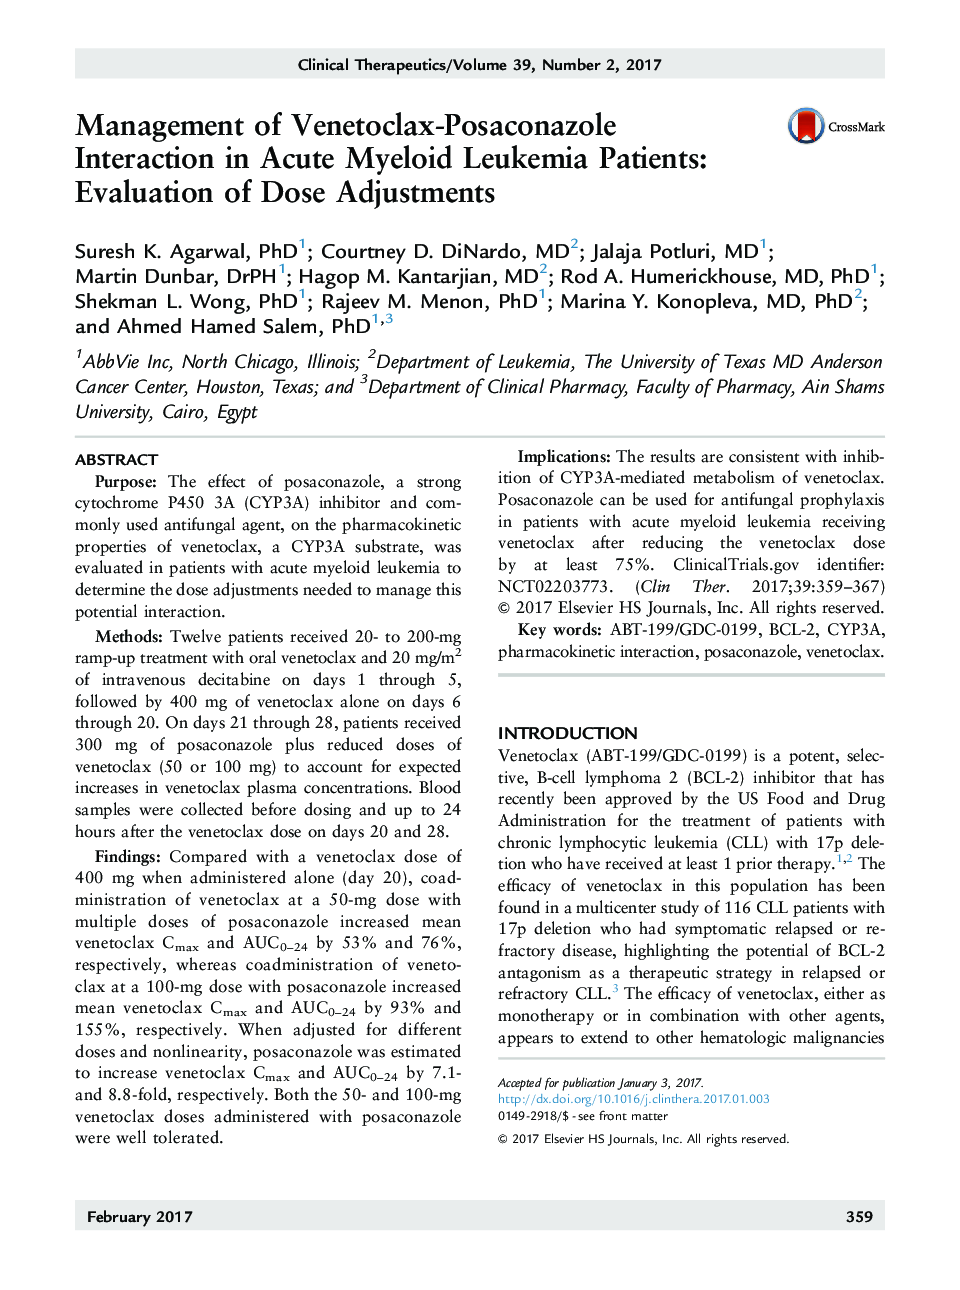 Management of Venetoclax-Posaconazole Interaction in Acute Myeloid Leukemia Patients: Evaluation of Dose Adjustments